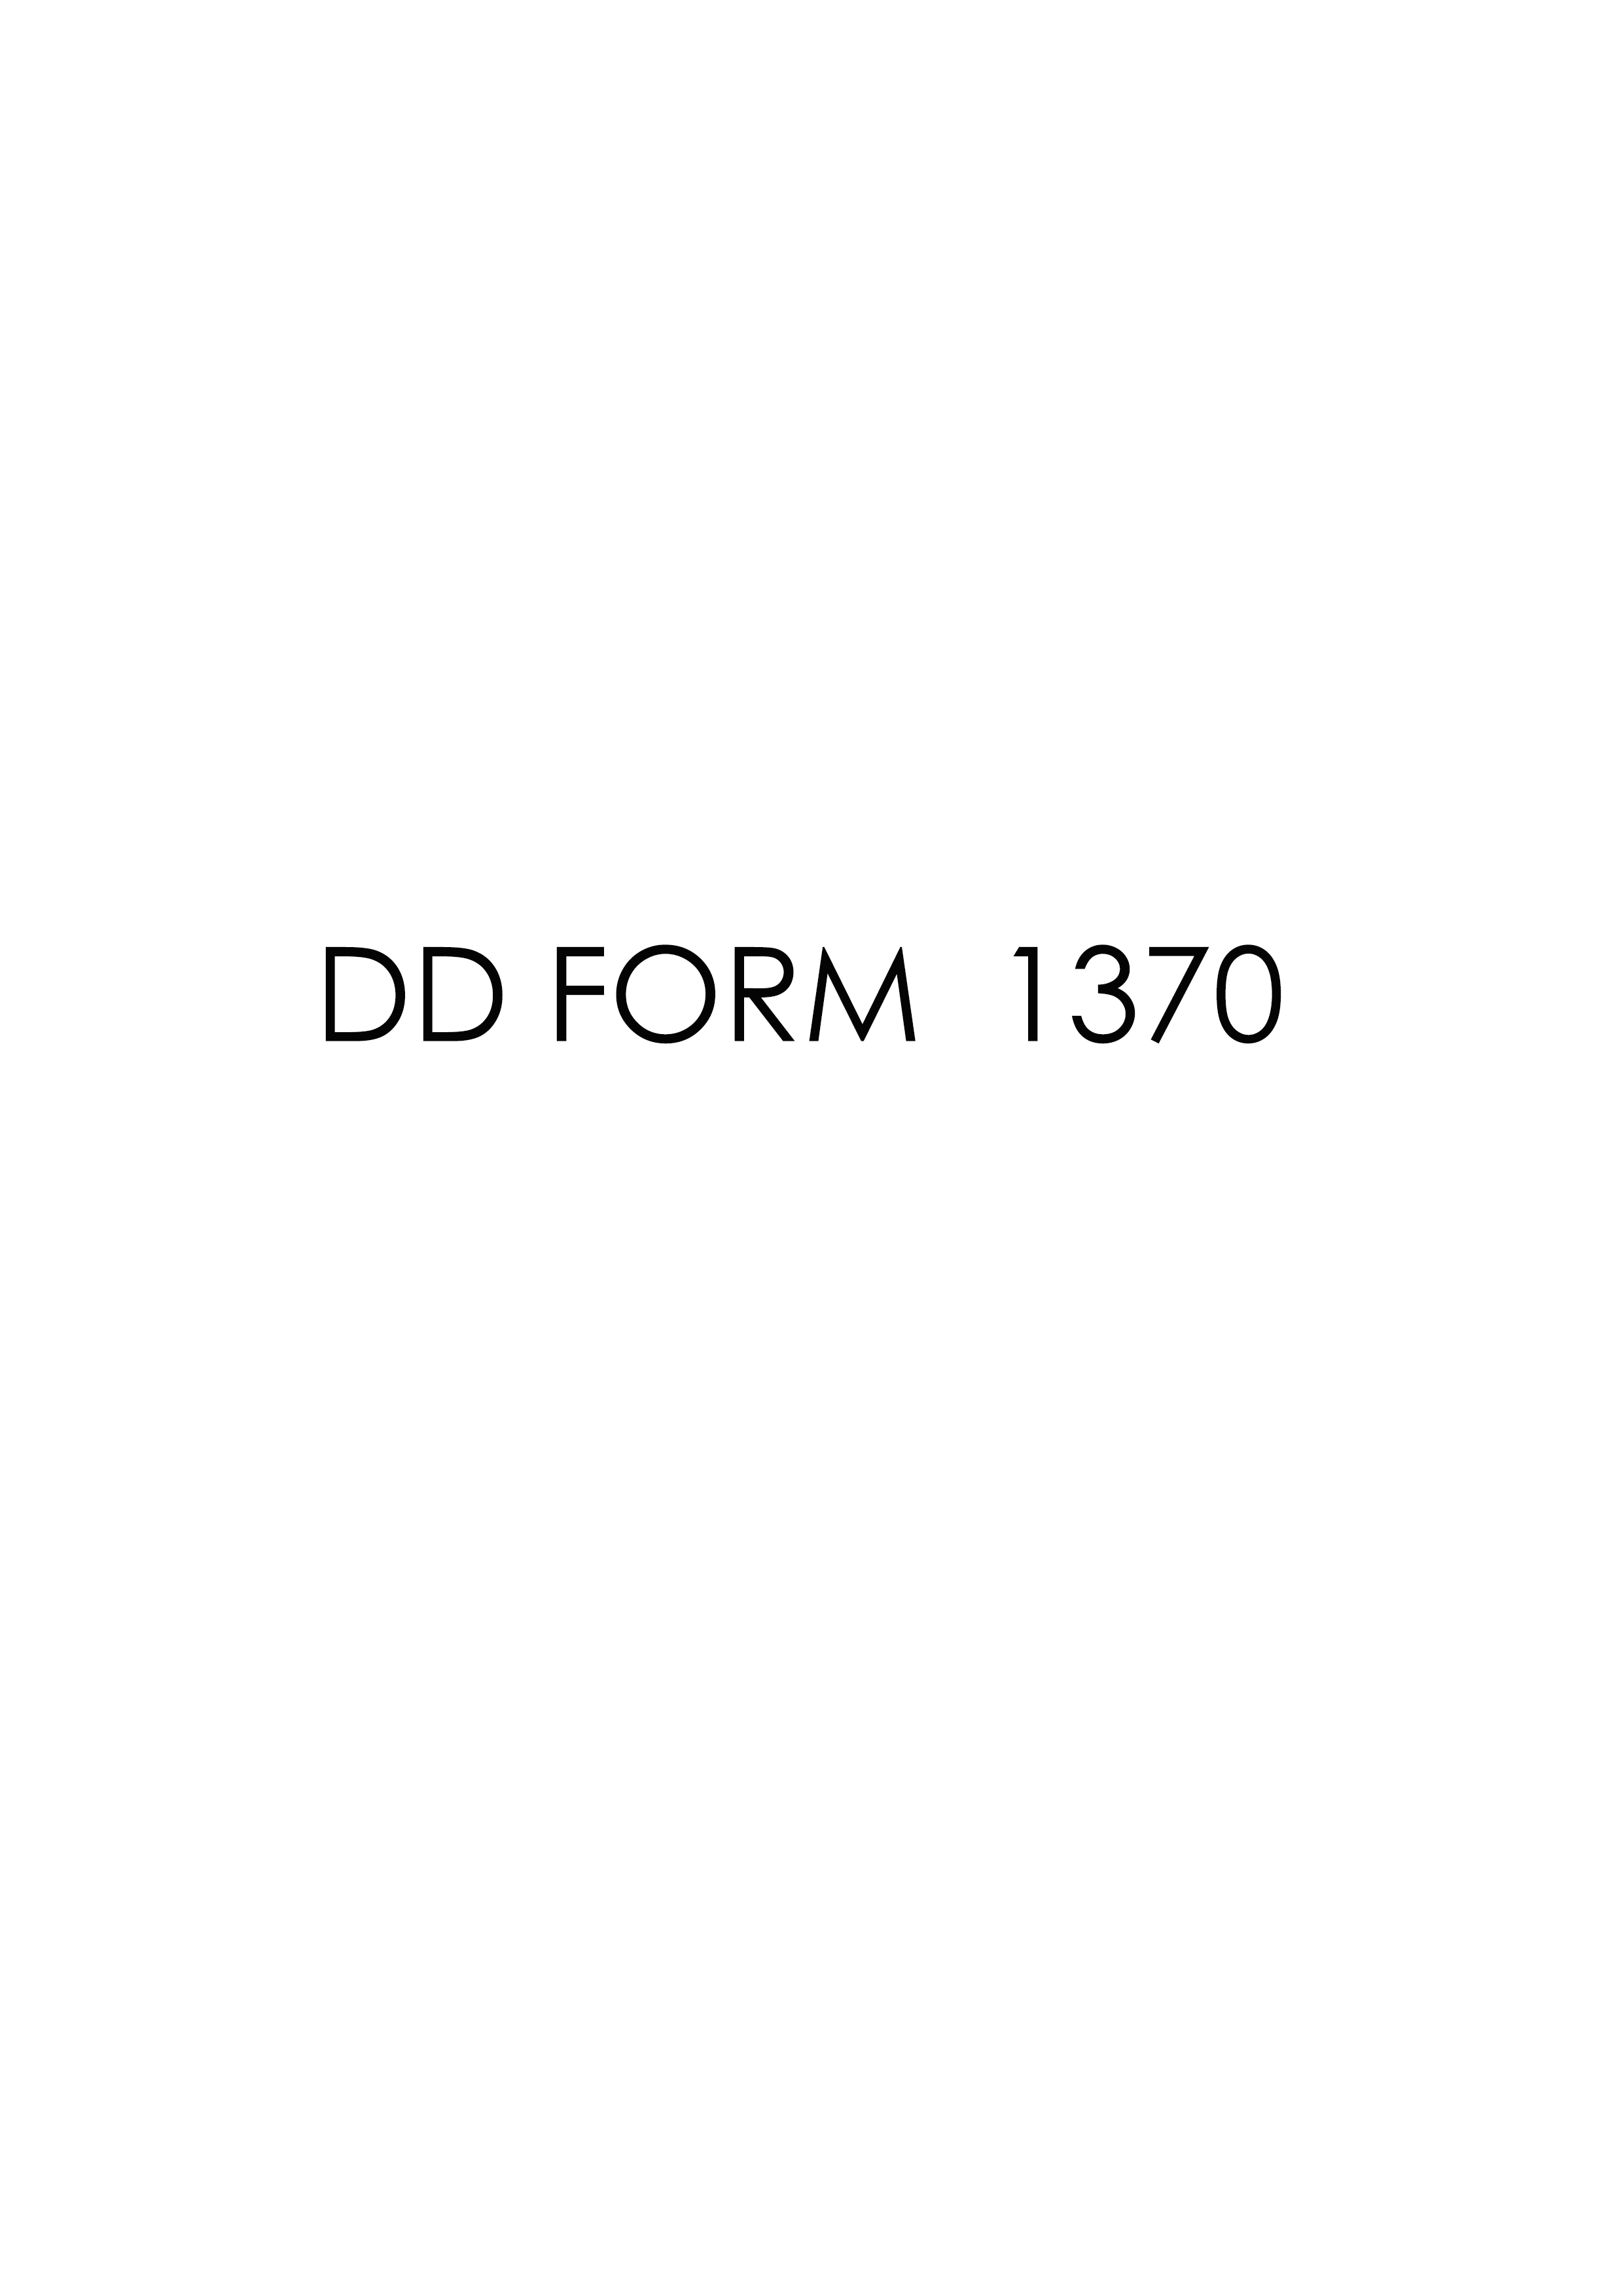 Download dd 1370 Form